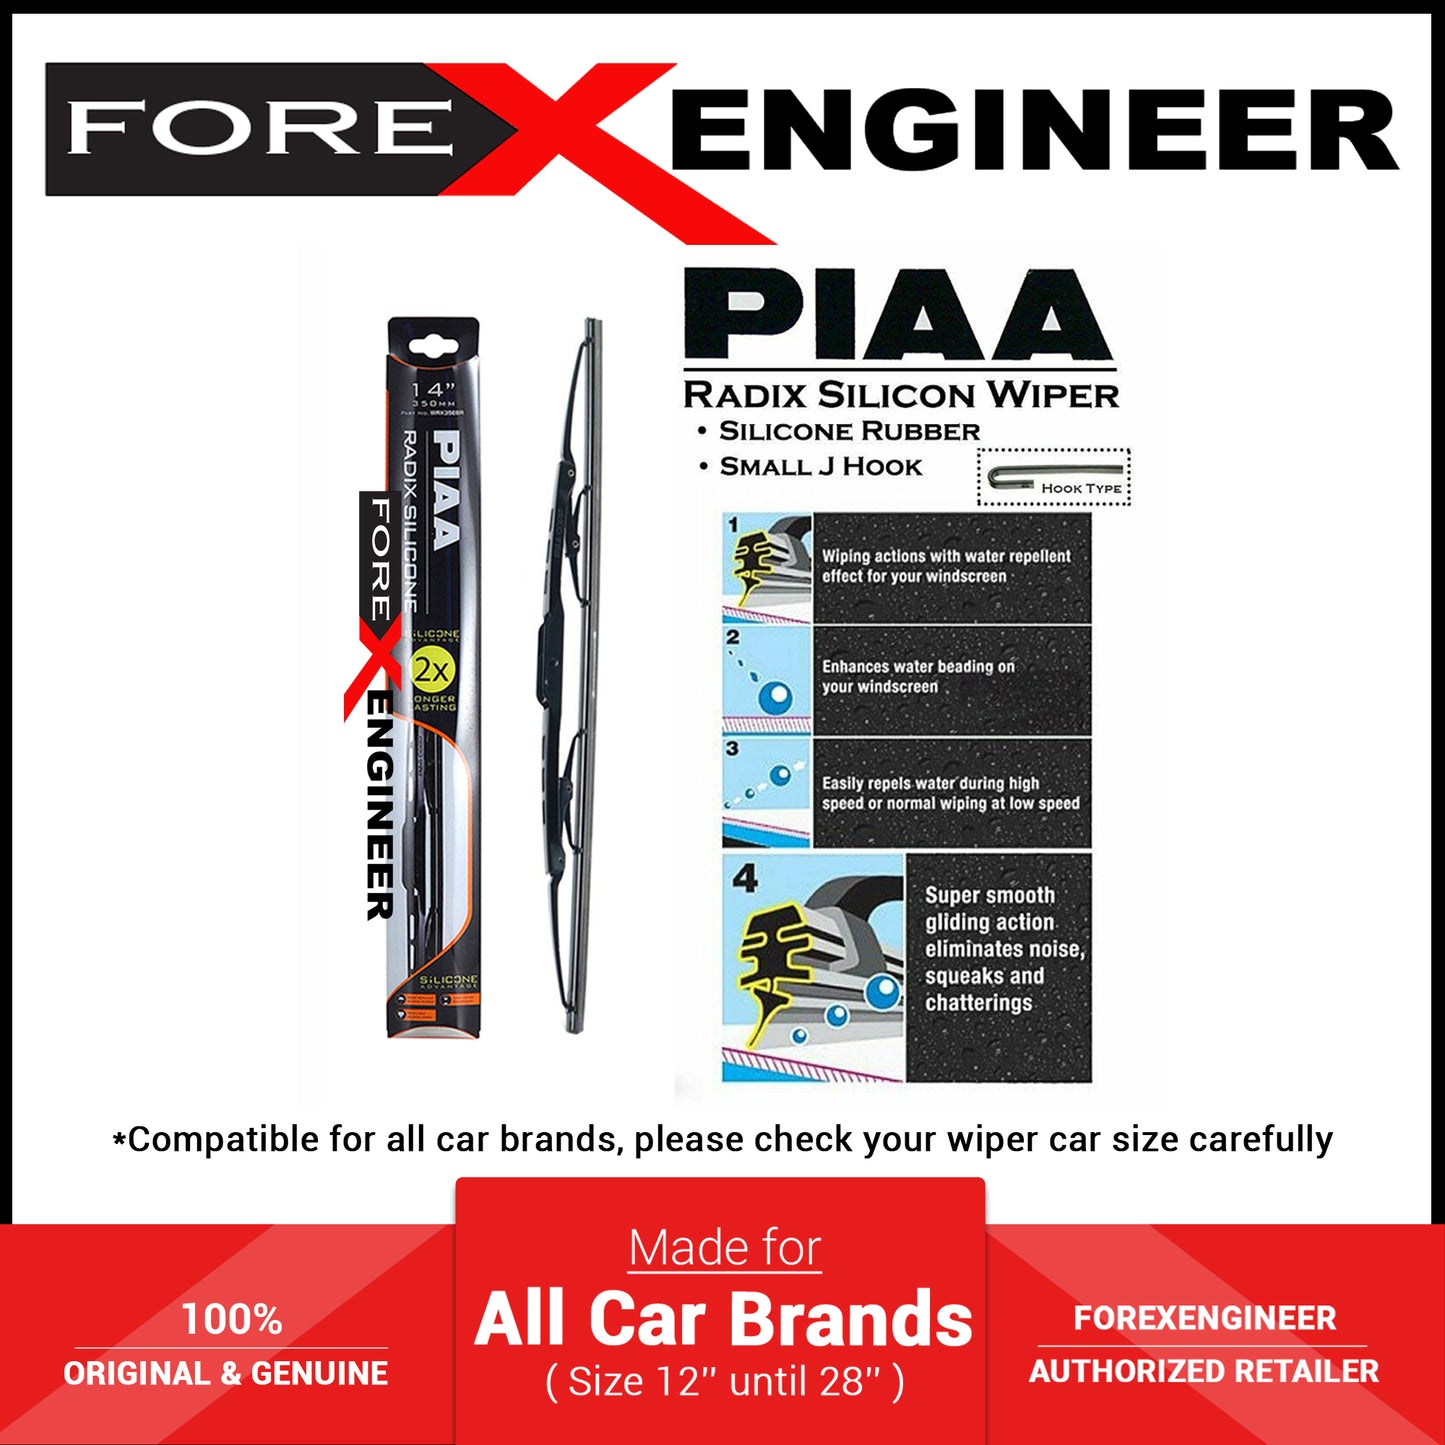 PIAA RADIX Car Wiper ( 28" ) - Black (Barcode: 4960311050513 )